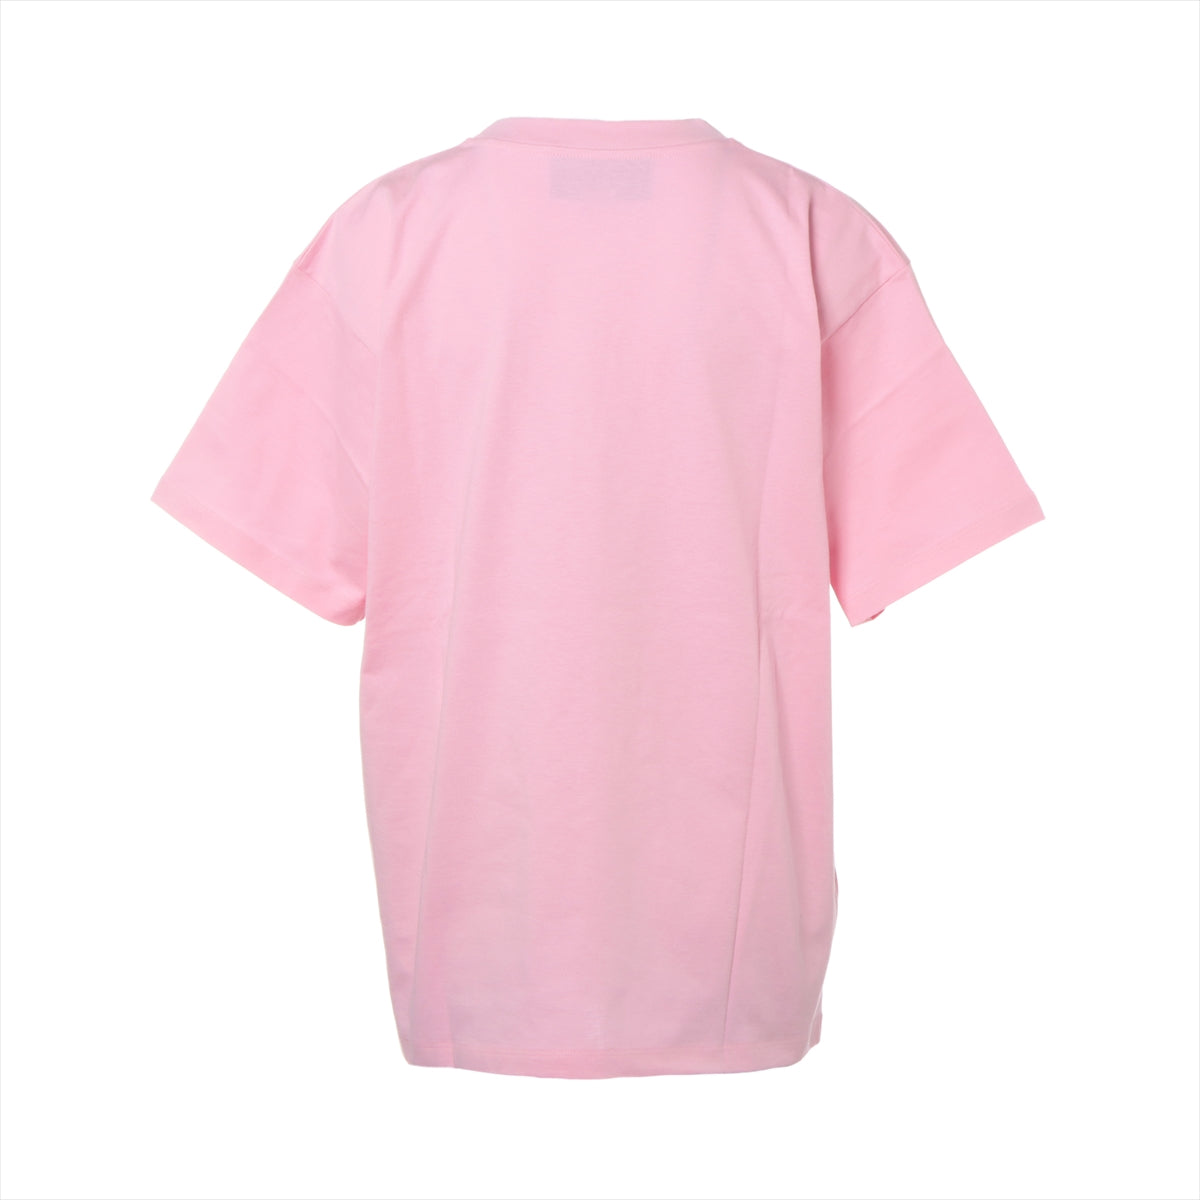 Gucci x adidas Cotton T-shirt XXS Ladies' Pink  723384